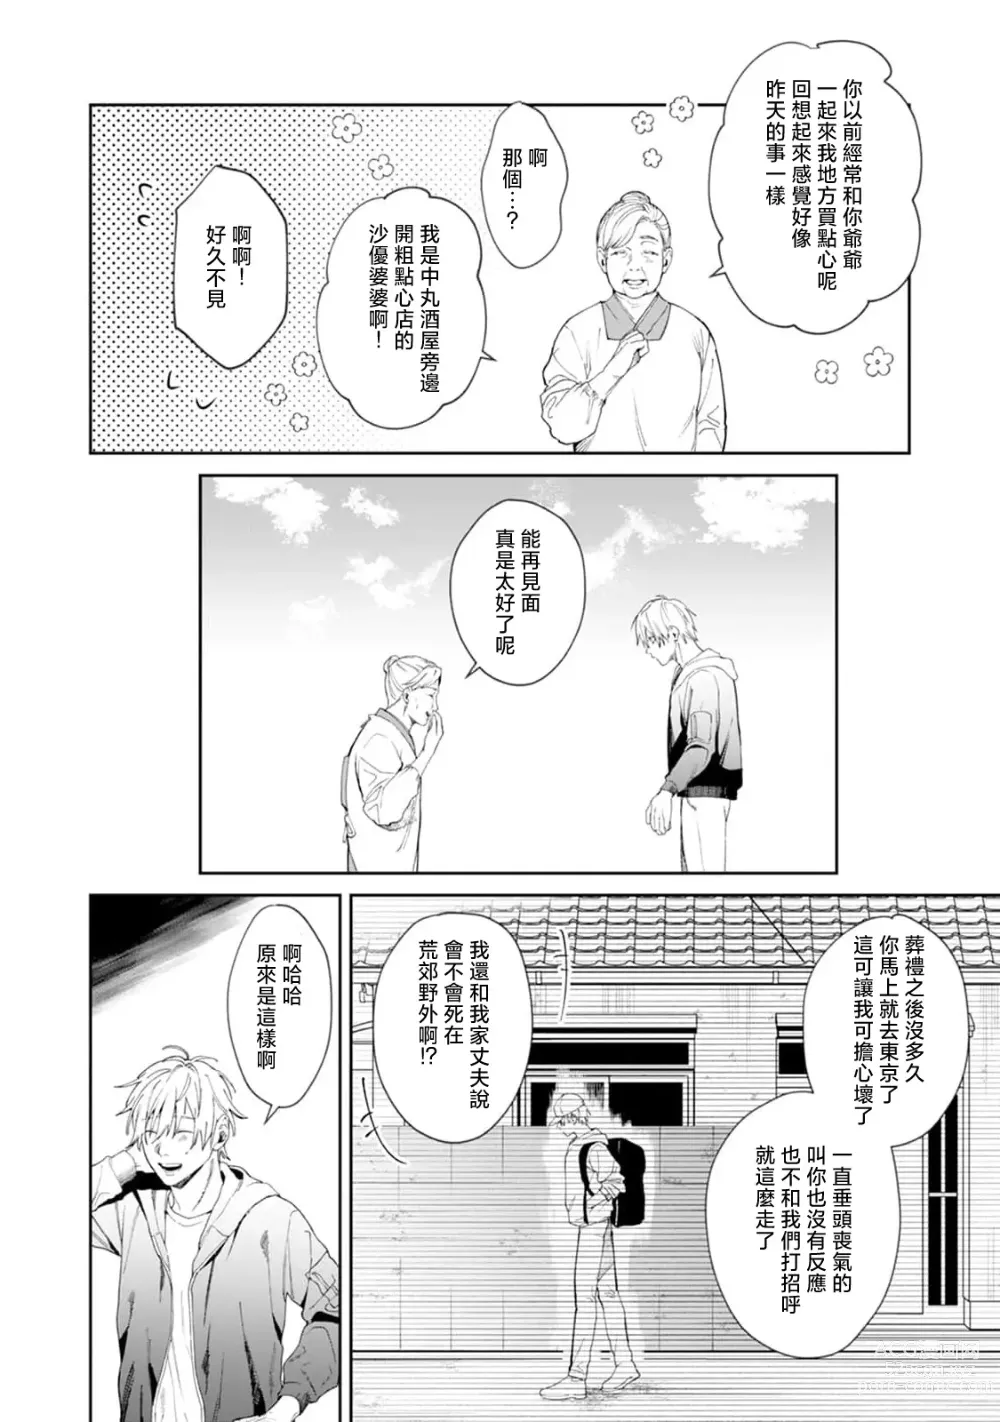 Page 130 of manga 夜色将尽时1-5